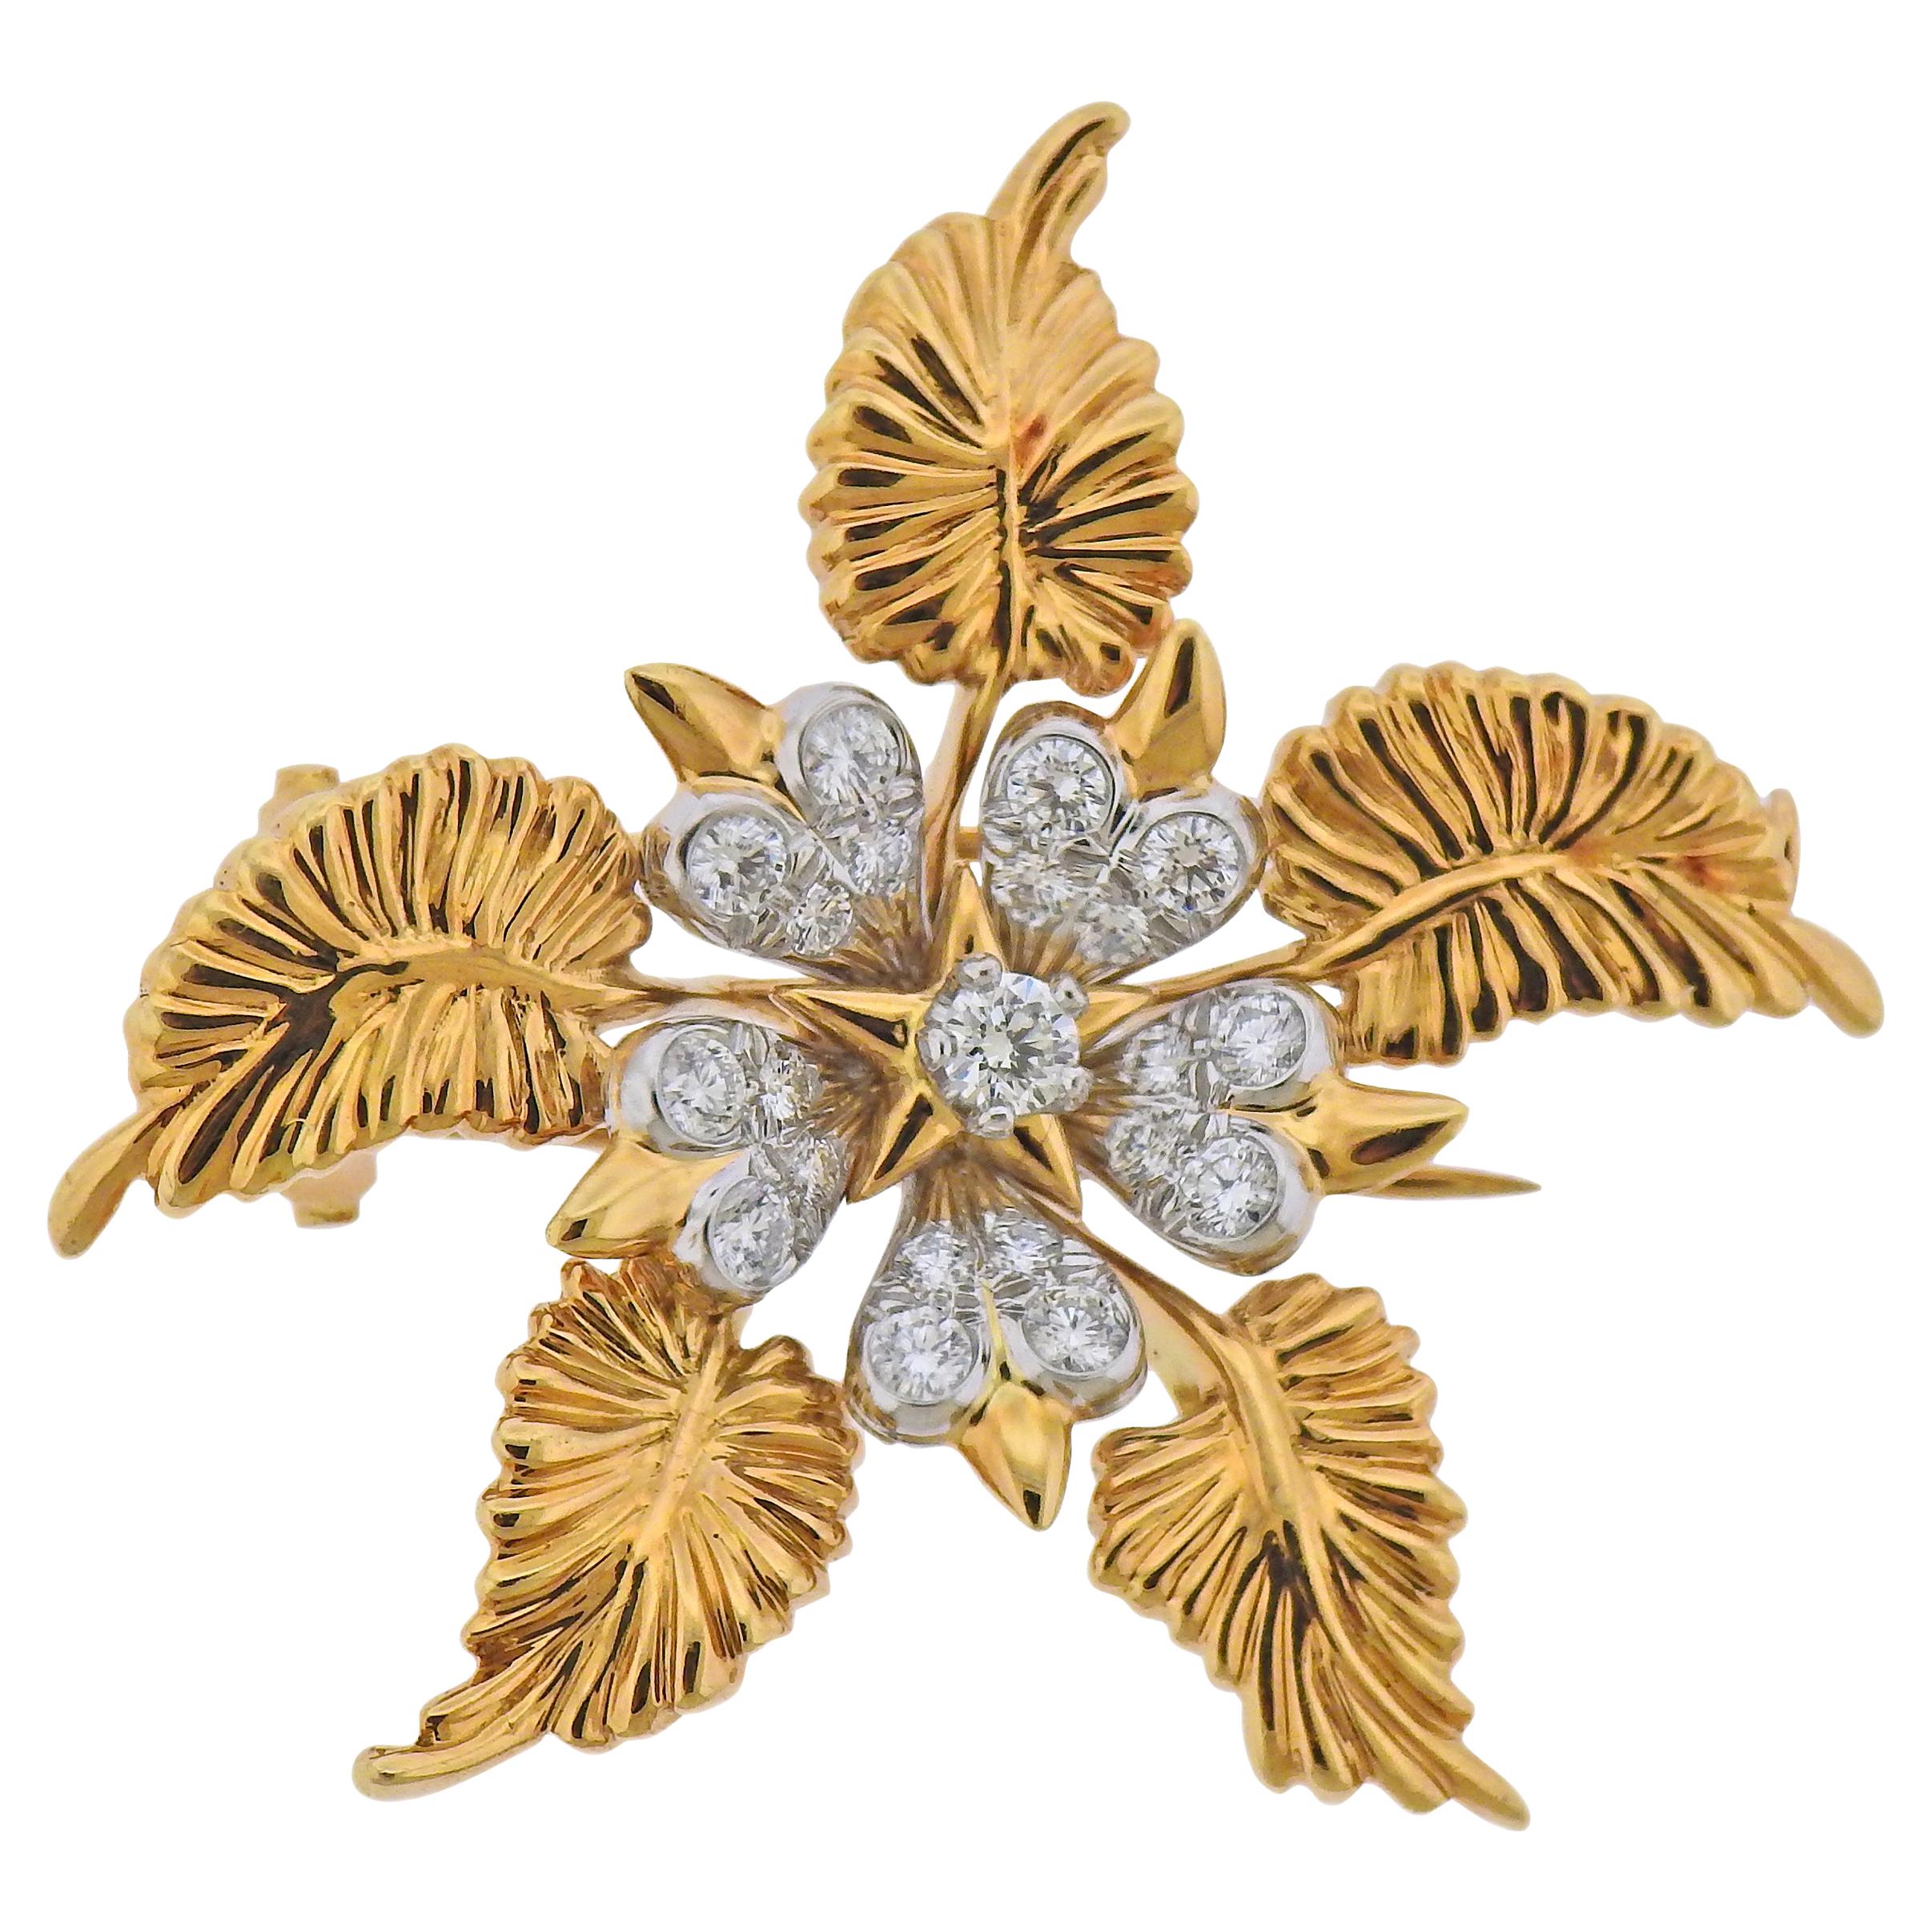 Джин Шлюмберже для броши Tiffany & Co. с бриллиантами, платиной и золотом